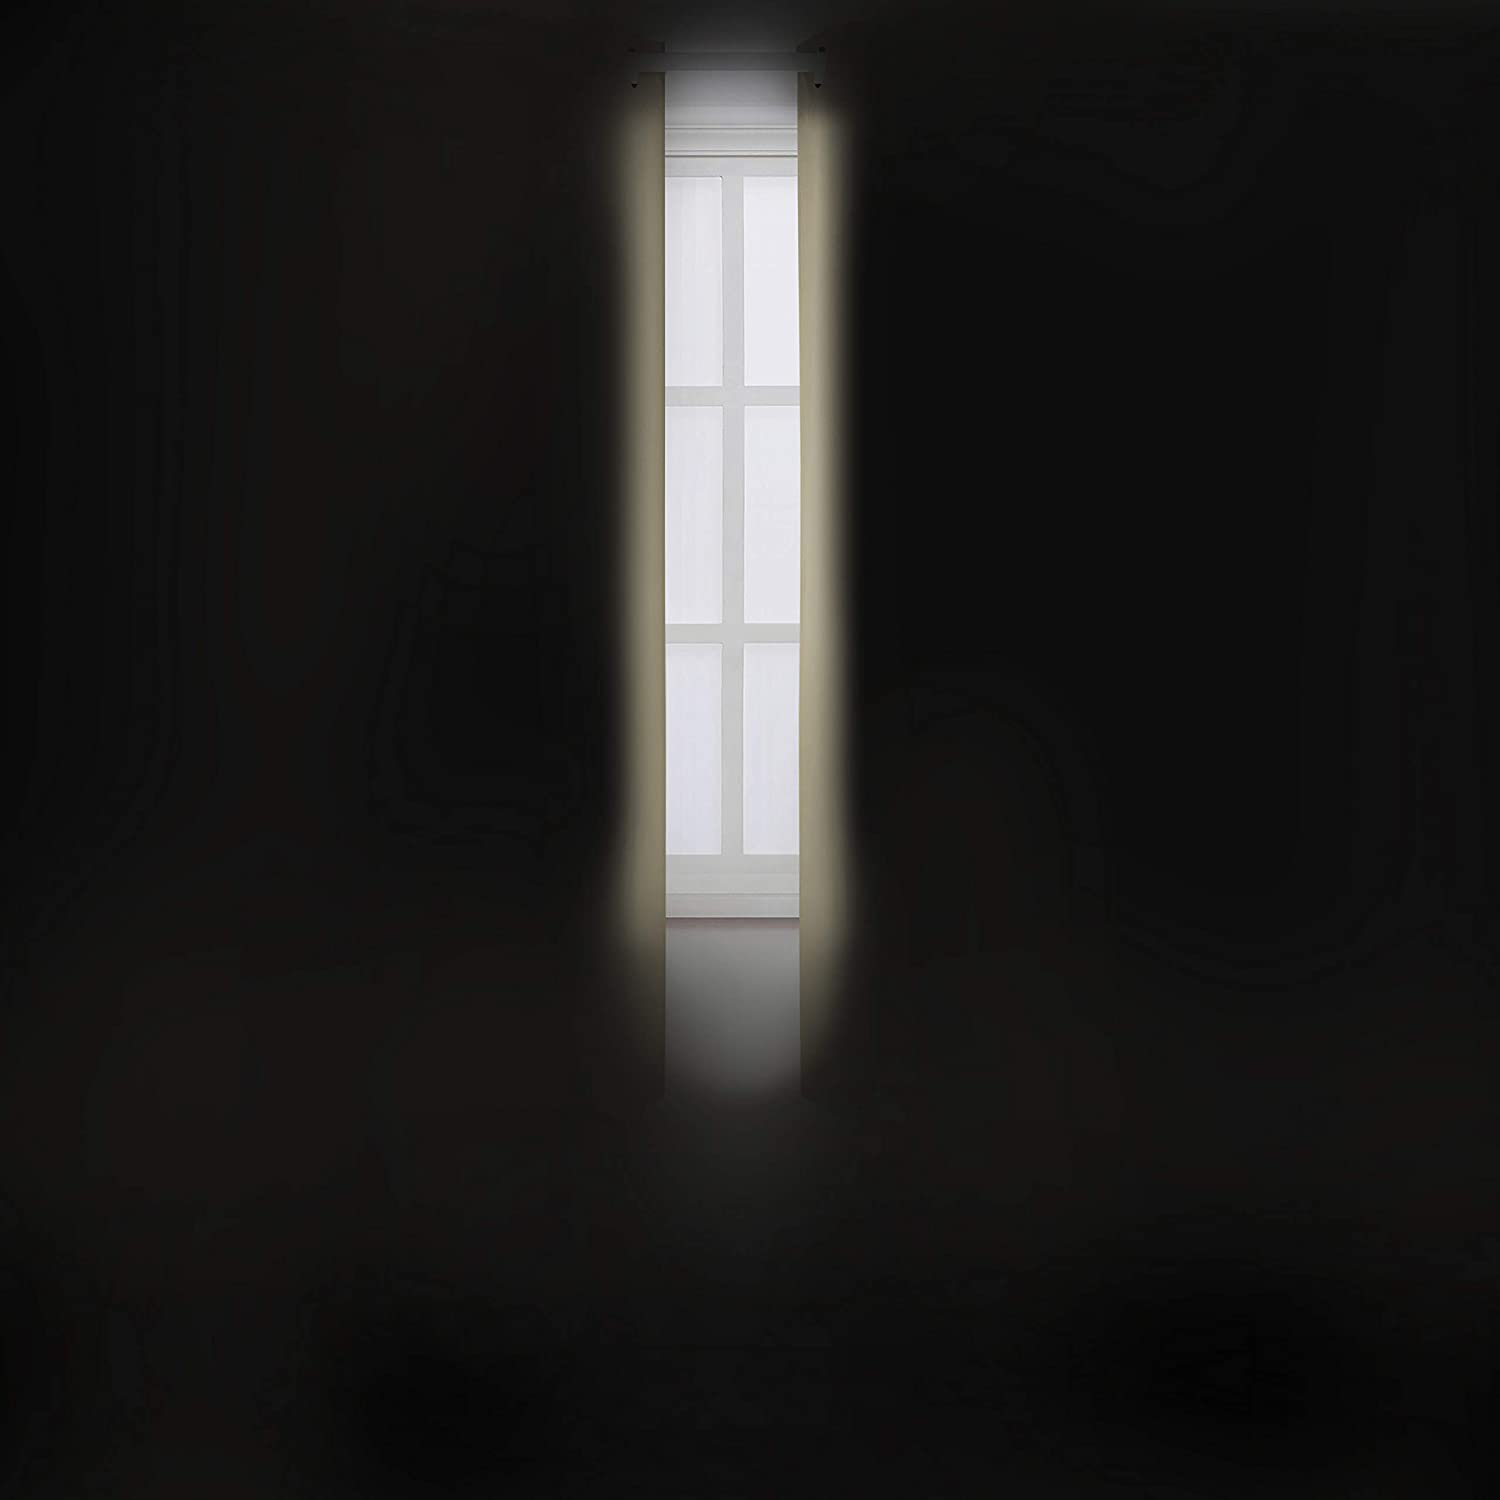 LEMOMO Beige Thermal Blackout Curtains/52 x 95 Inch/Set of 2 Panels Room Darkening Curtains for Bedroom